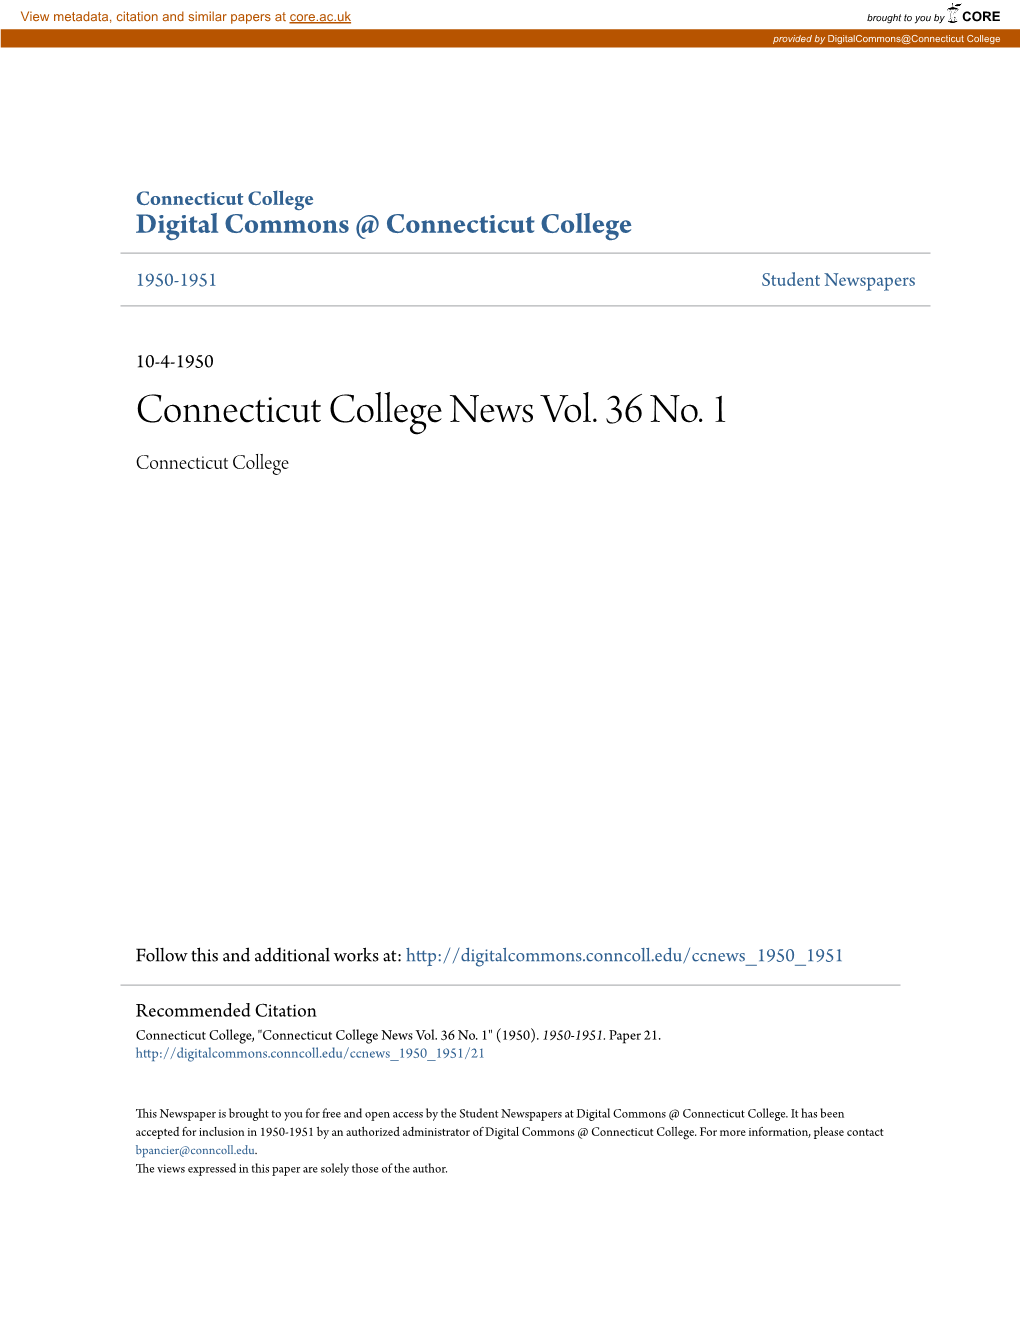 Connecticut College News Vol. 36 No. 1 Connecticut College